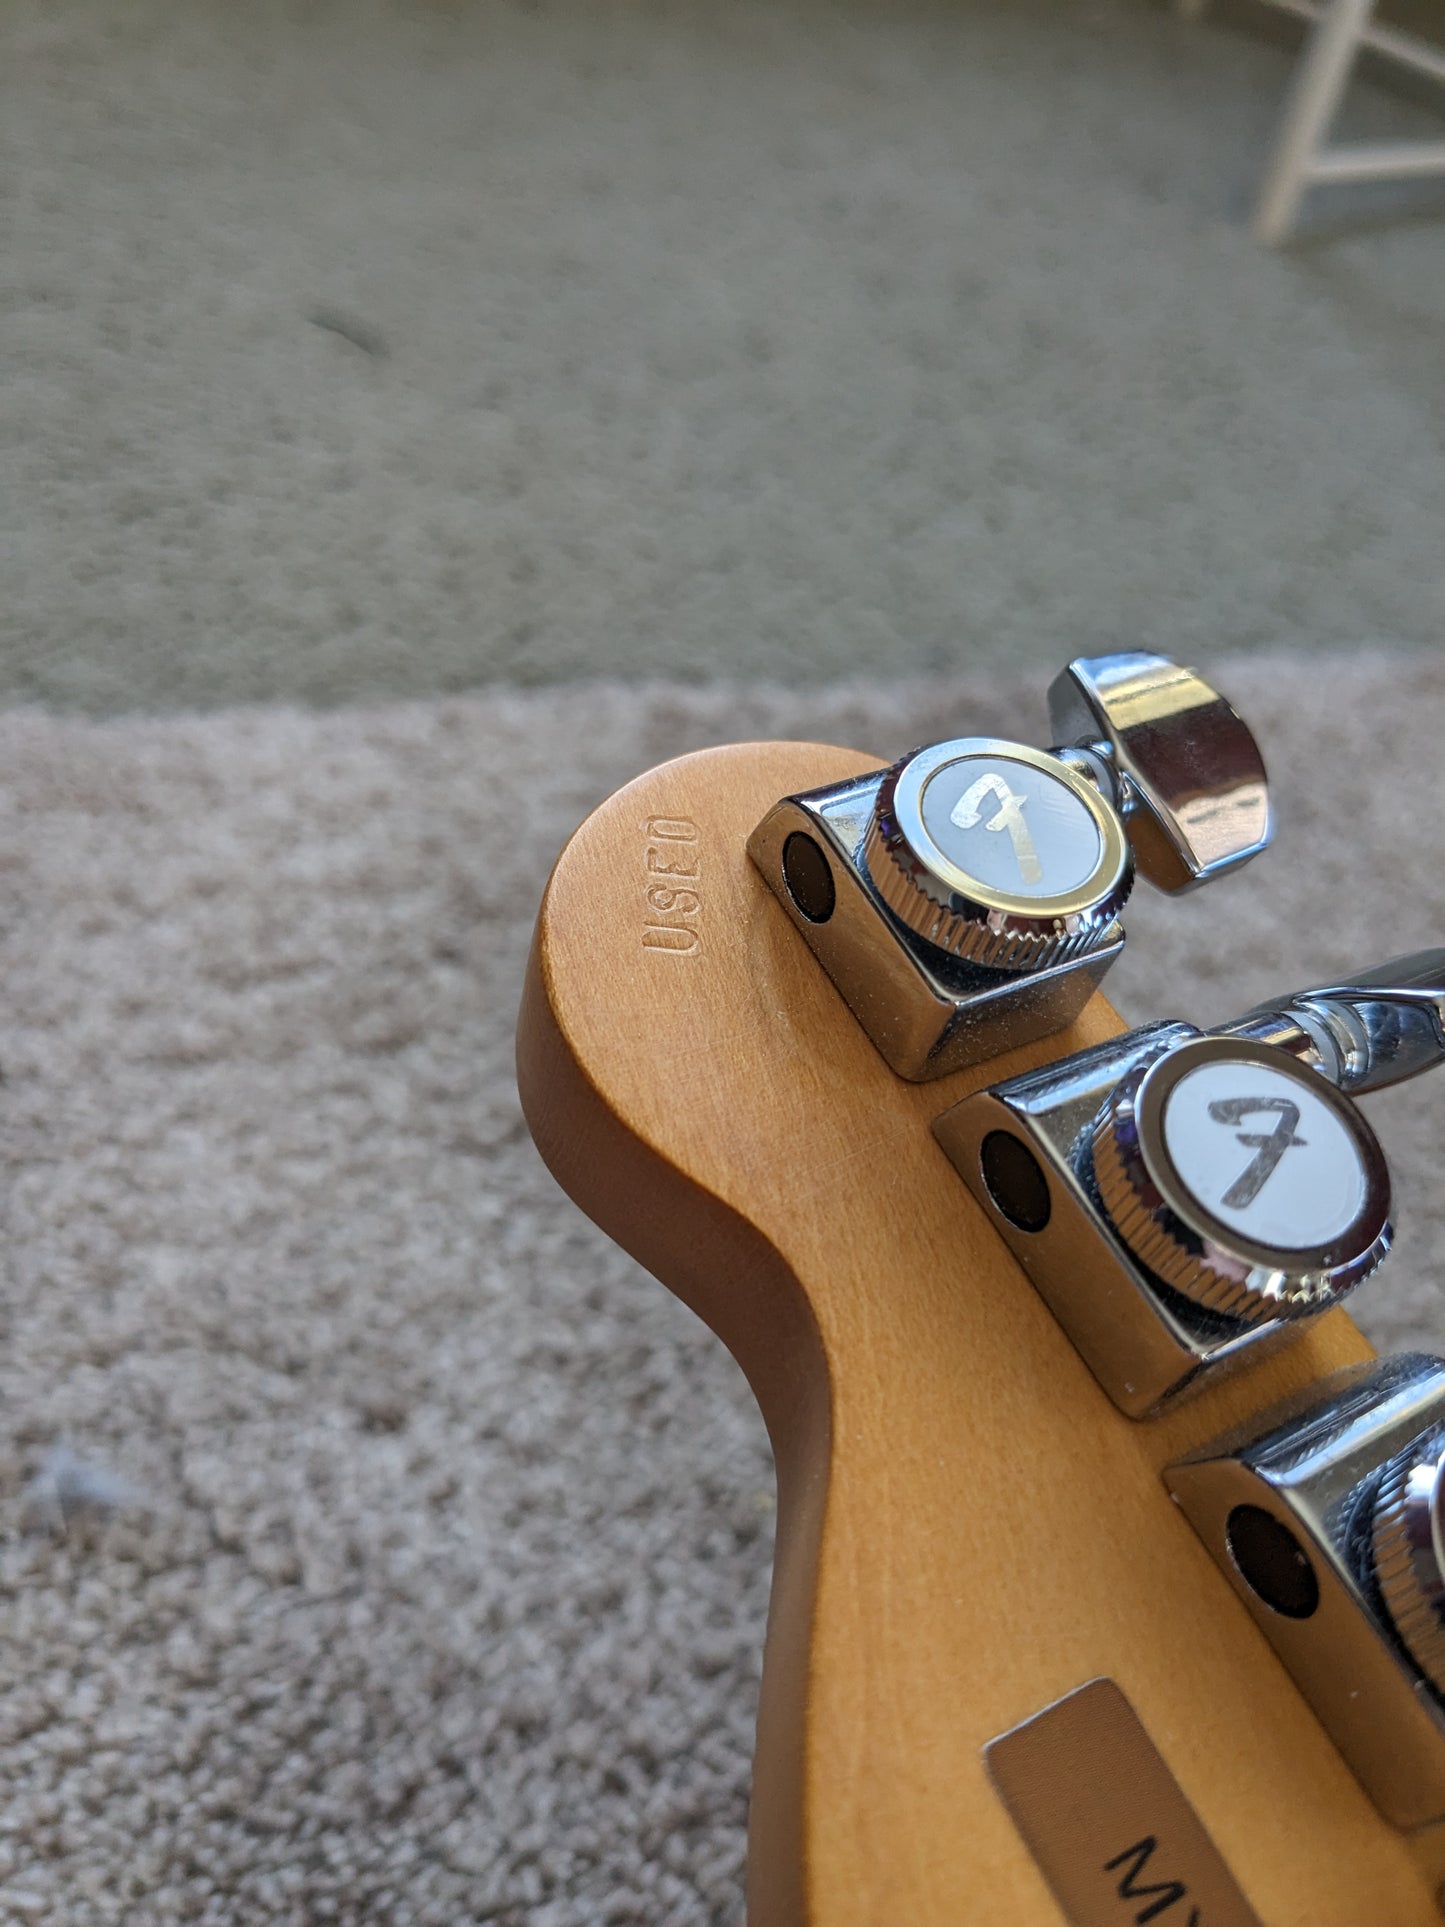 Fender Player Plus Nashville Telecaster with Pau Ferro Fretboard 2021 - Present - 3-Color Sunburst